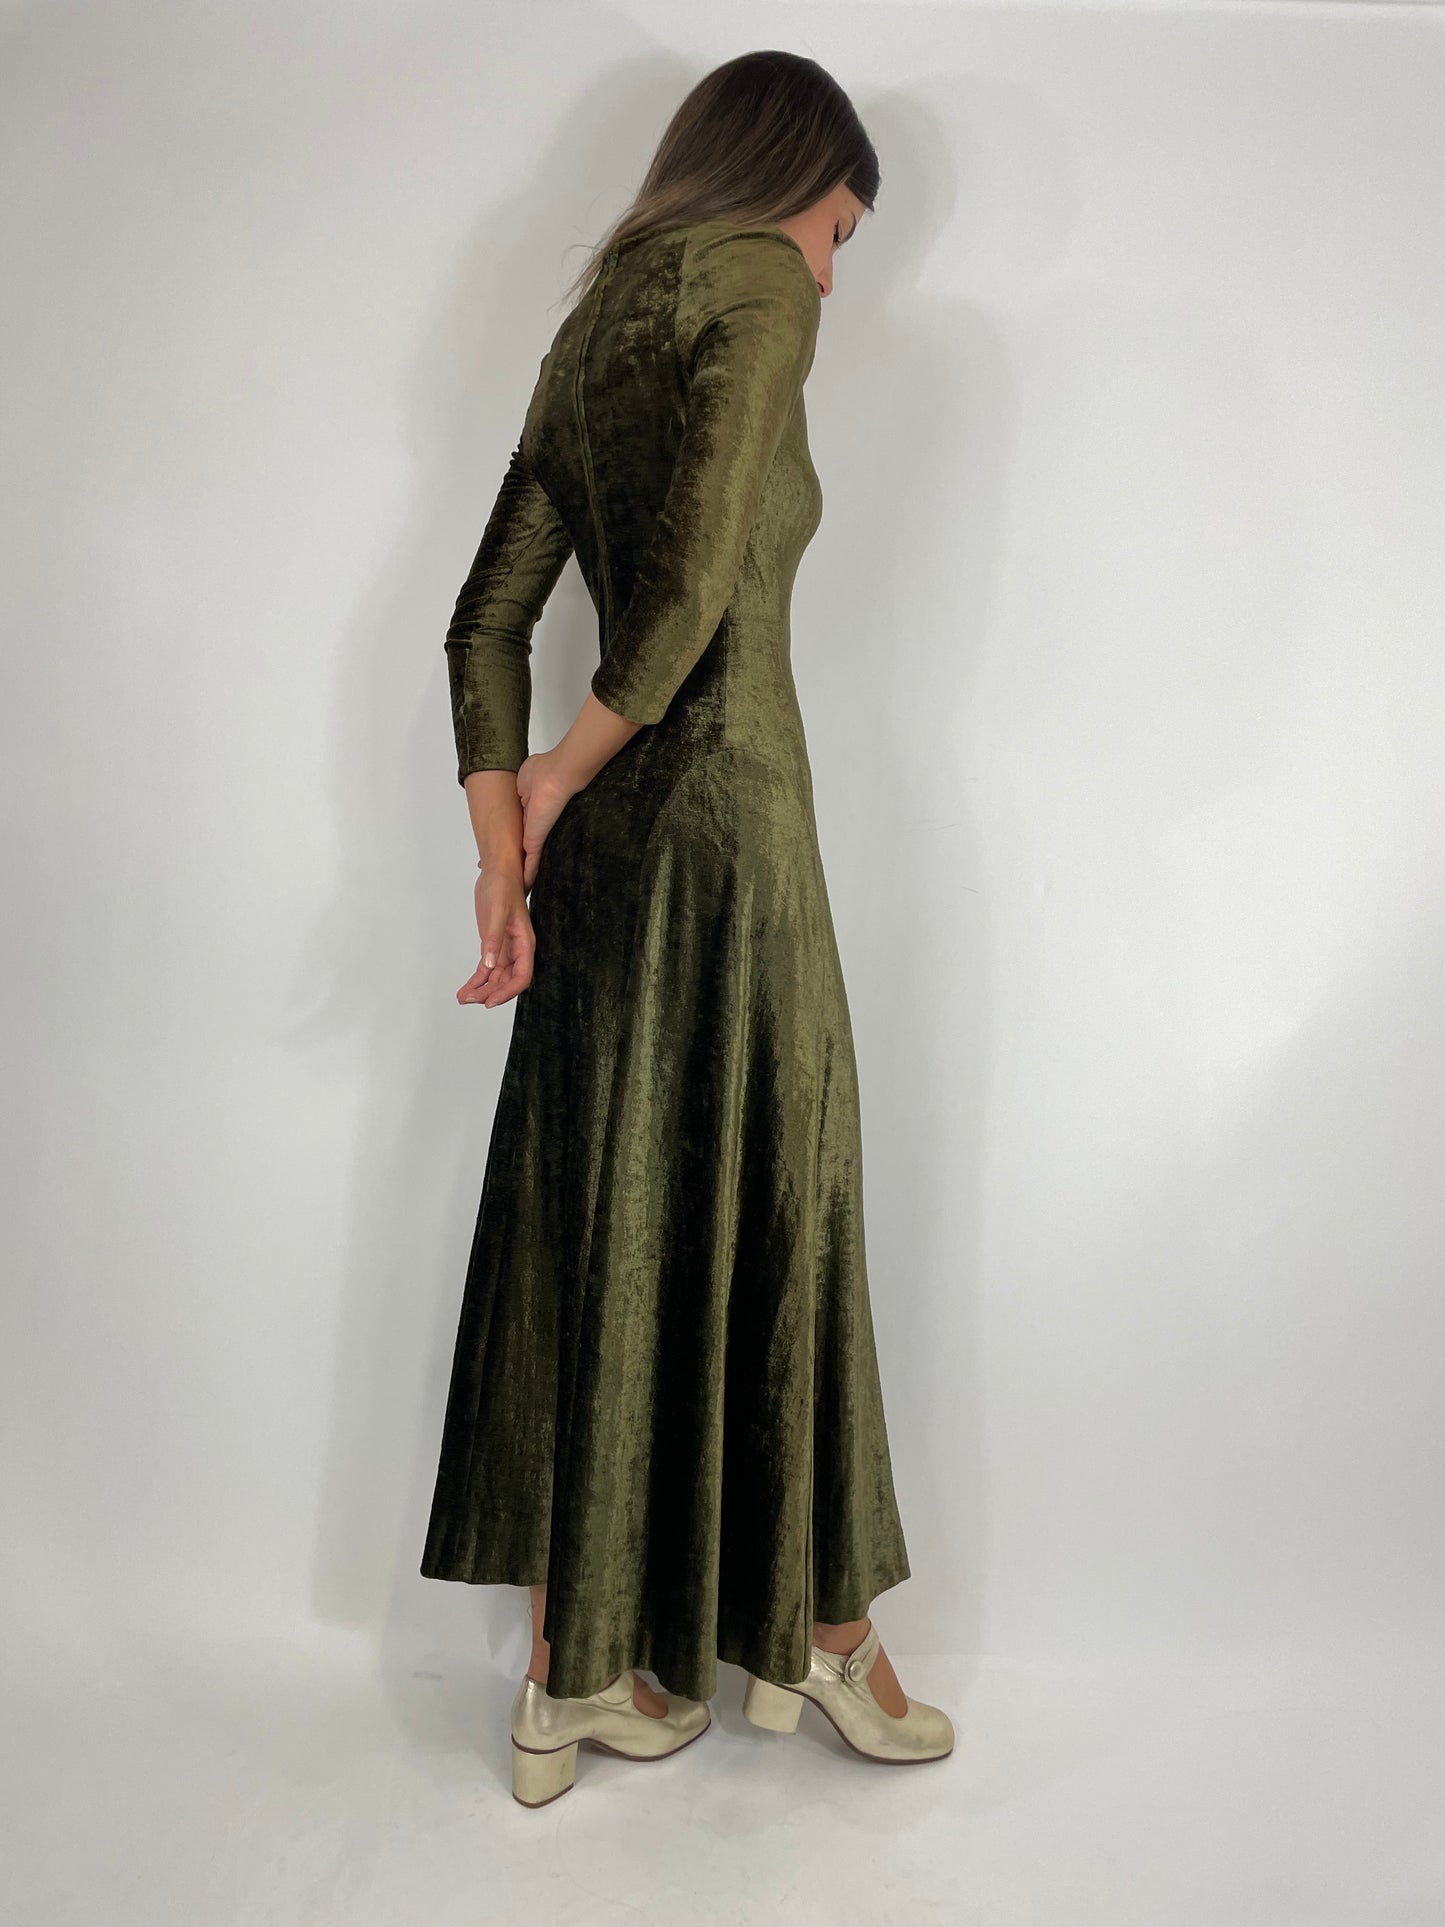 Tailored dress 1960